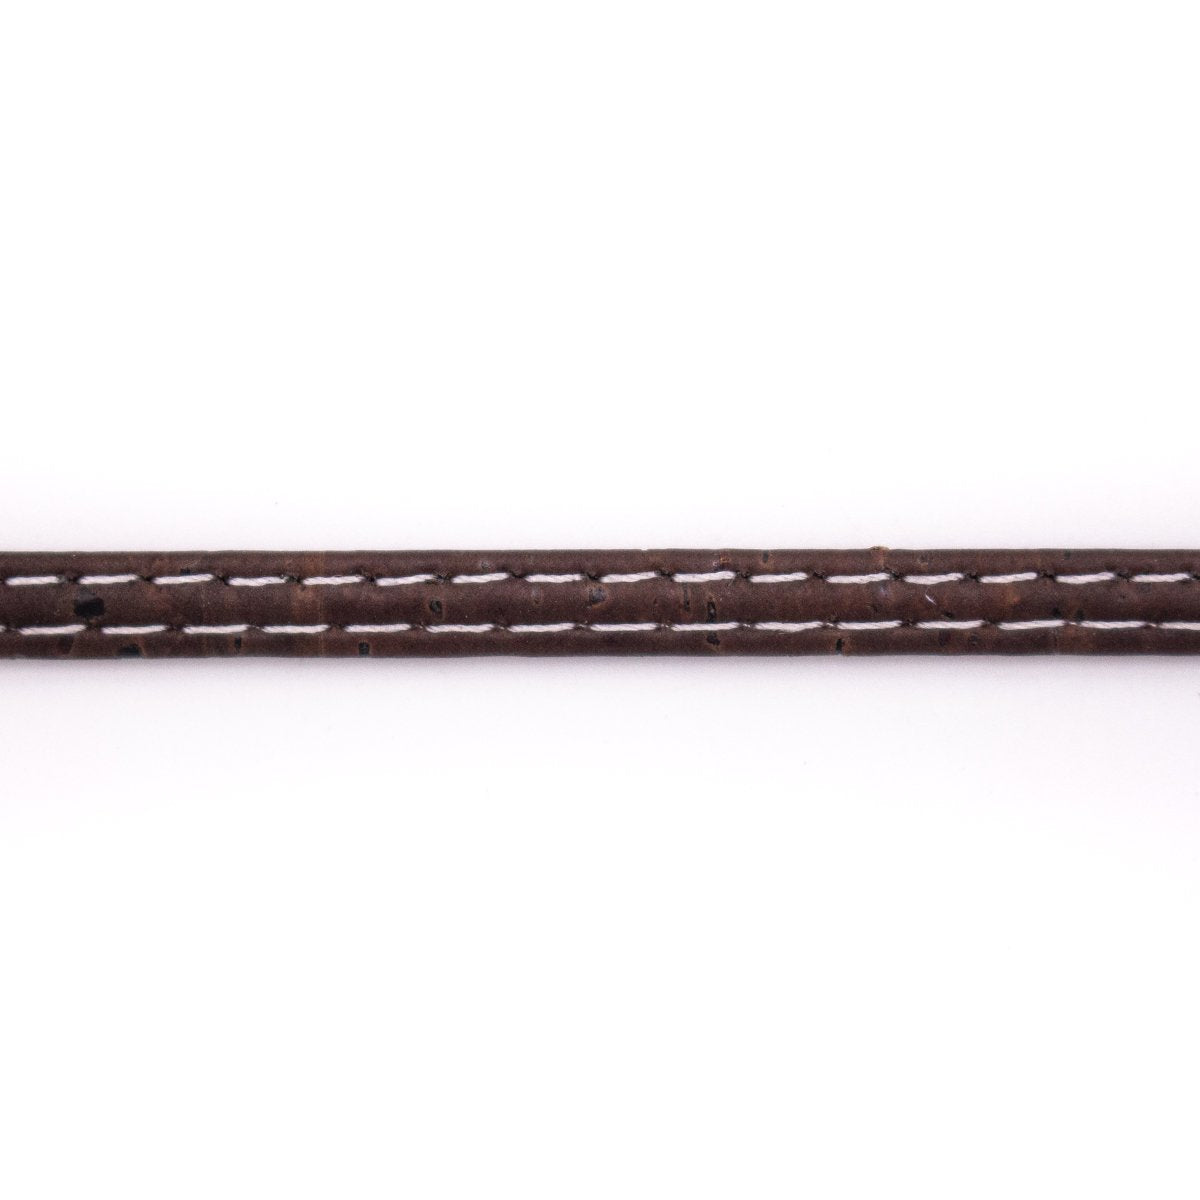 10 mètres de cordon plat en liège marron de 5 mm COR-512 